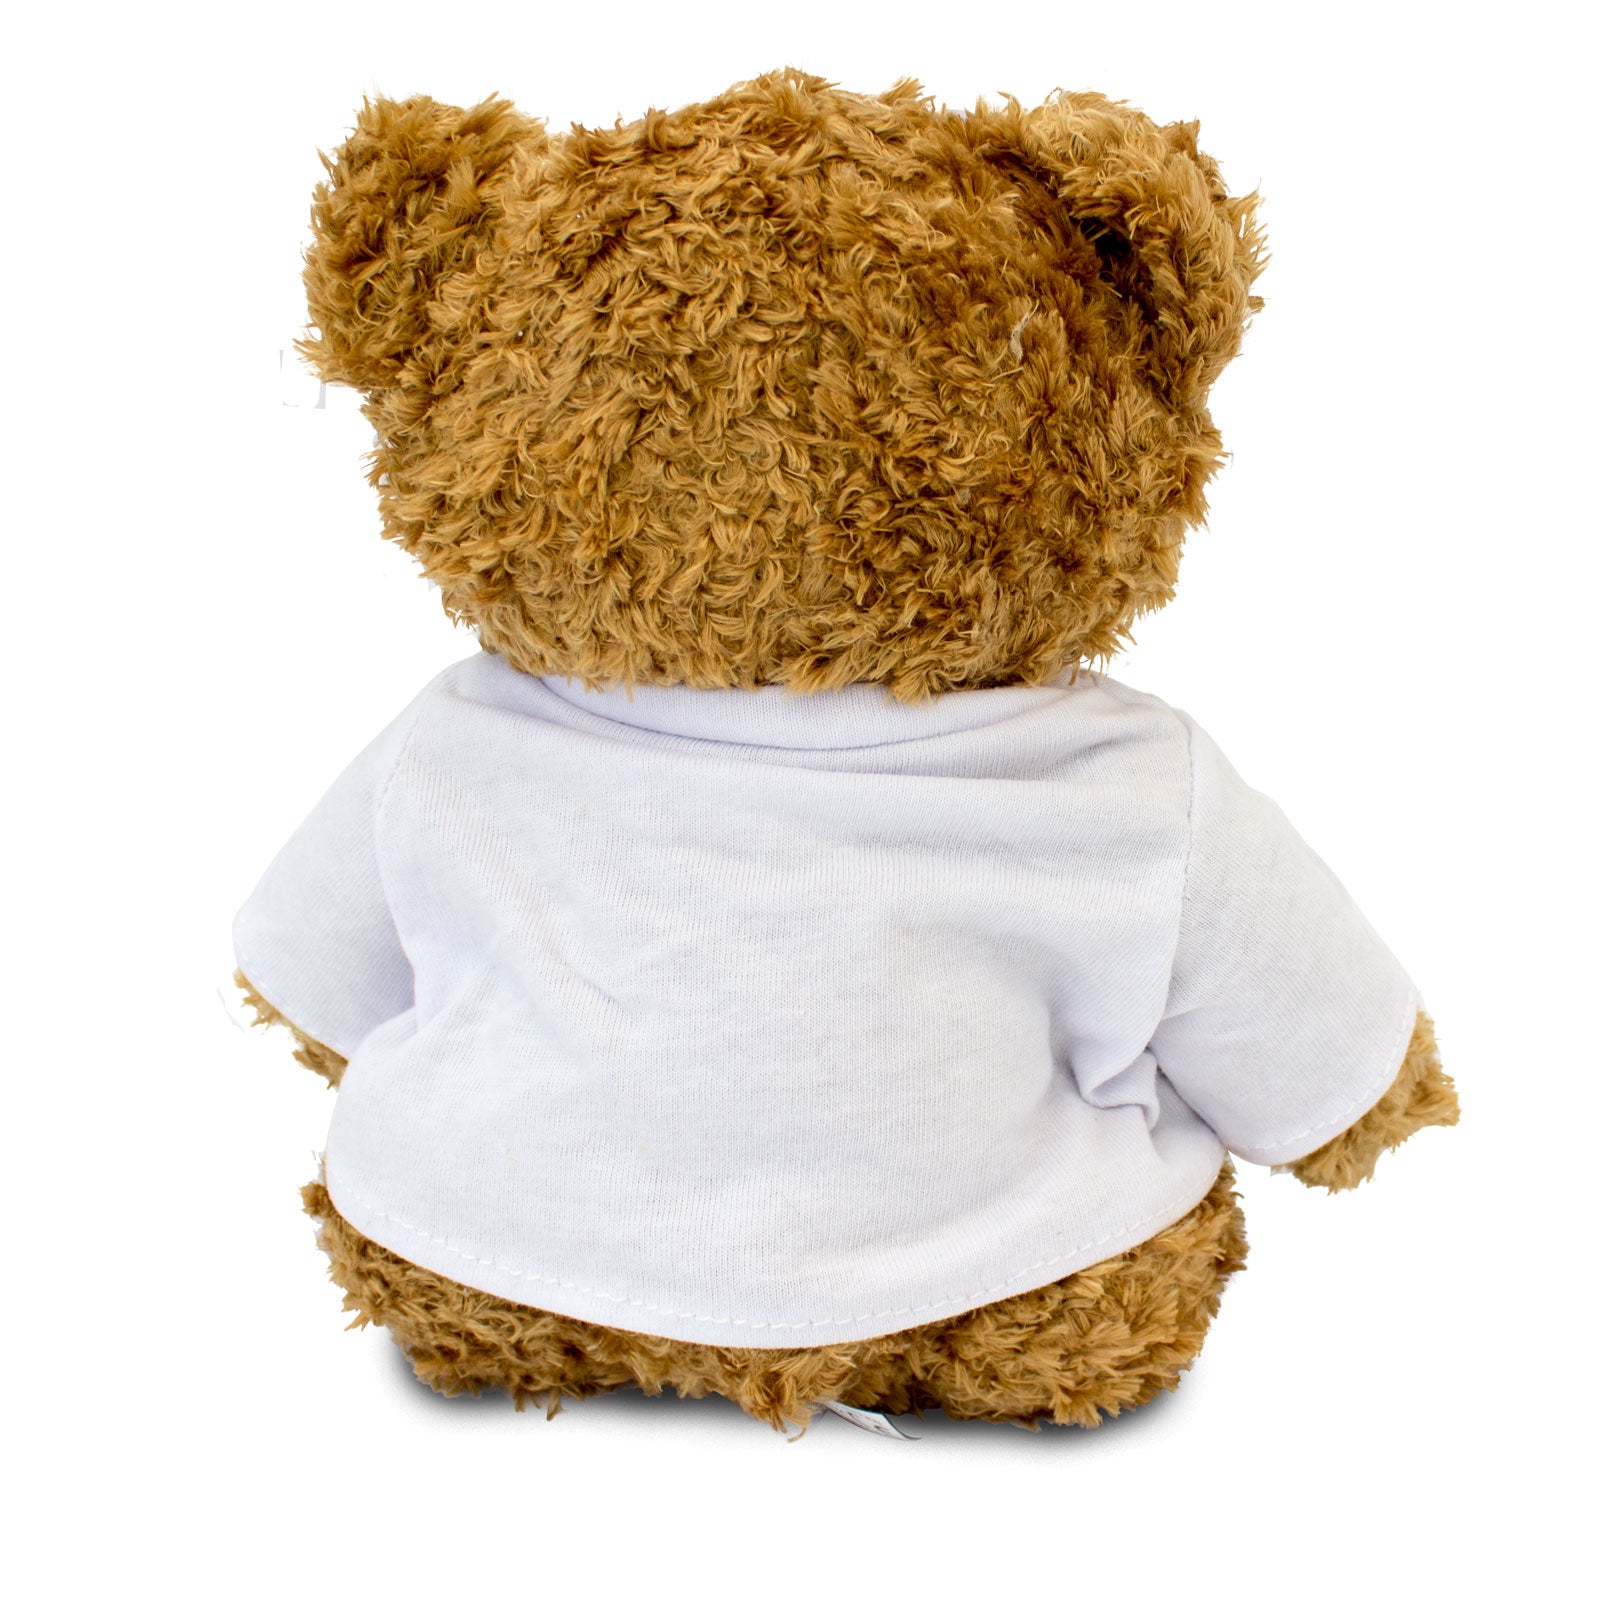 Get Well Soon Almyra - Teddy Bear